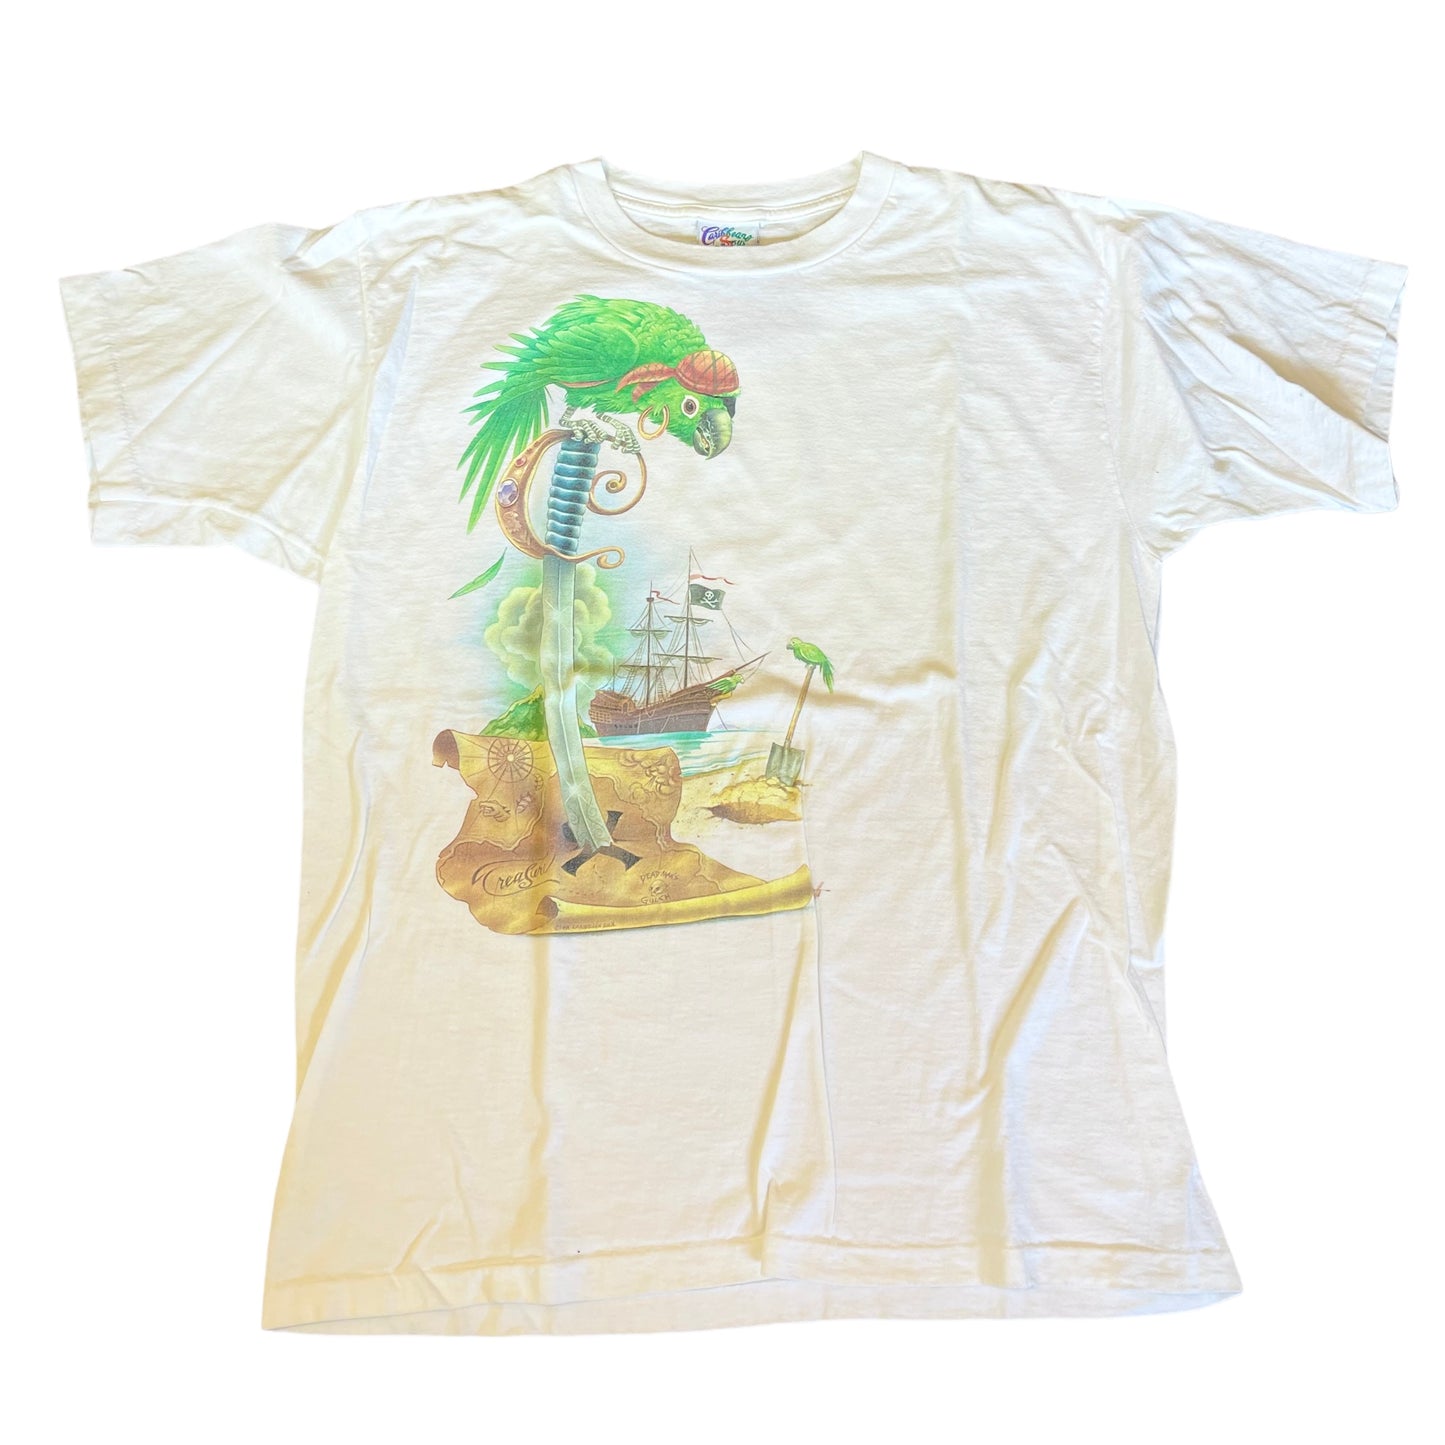 Vintage Treasure Island Pirate Shirt